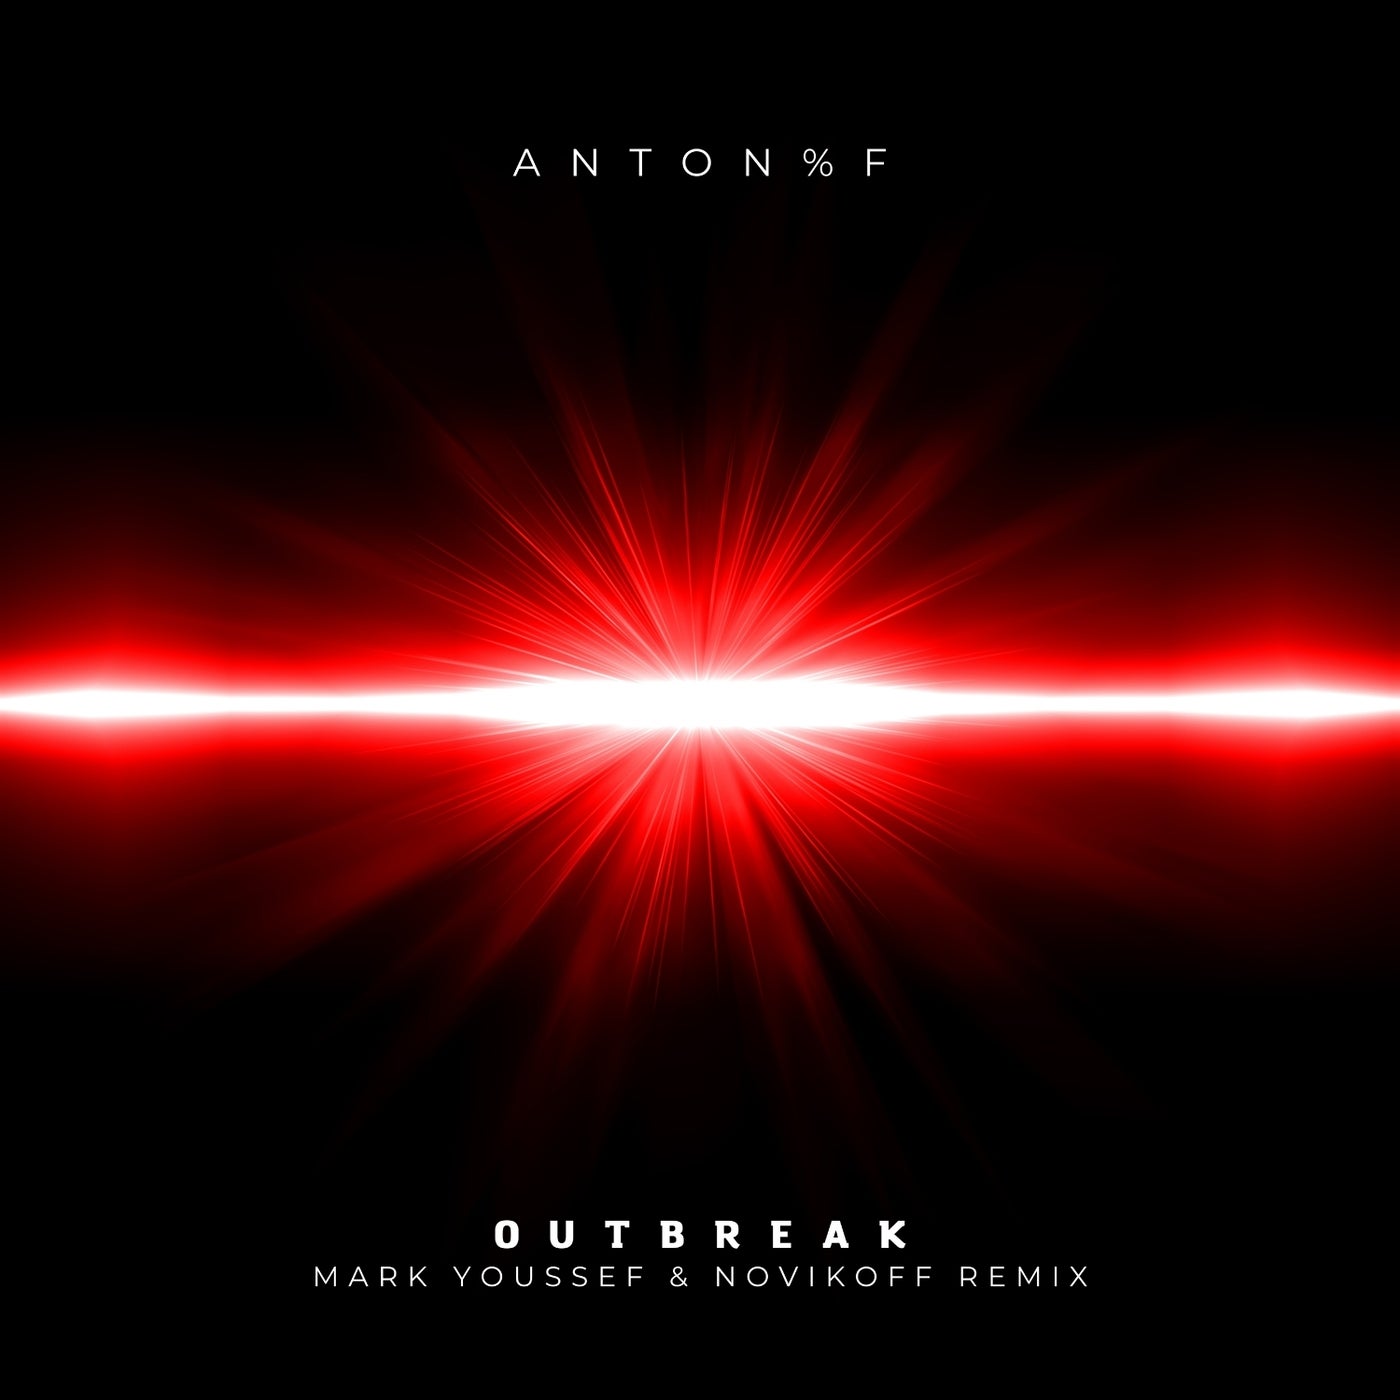 Outbreak (Mark Youssef & Novikoff Remix)